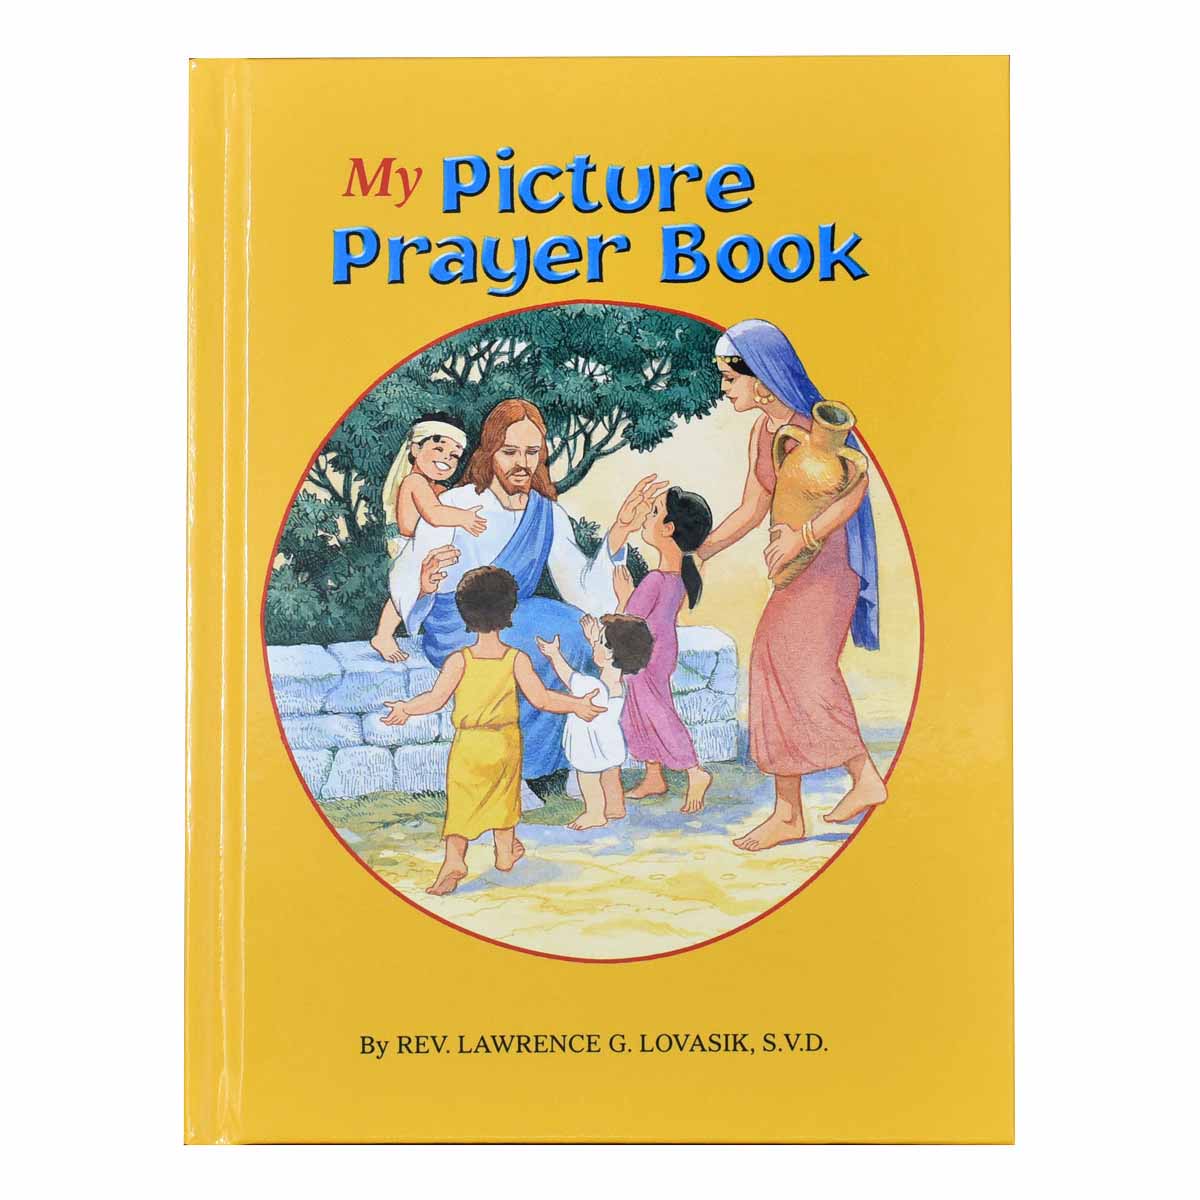 My Picture Prayer Book by Rev. Lawrence G. Lovasik, S.V.D. 134/22